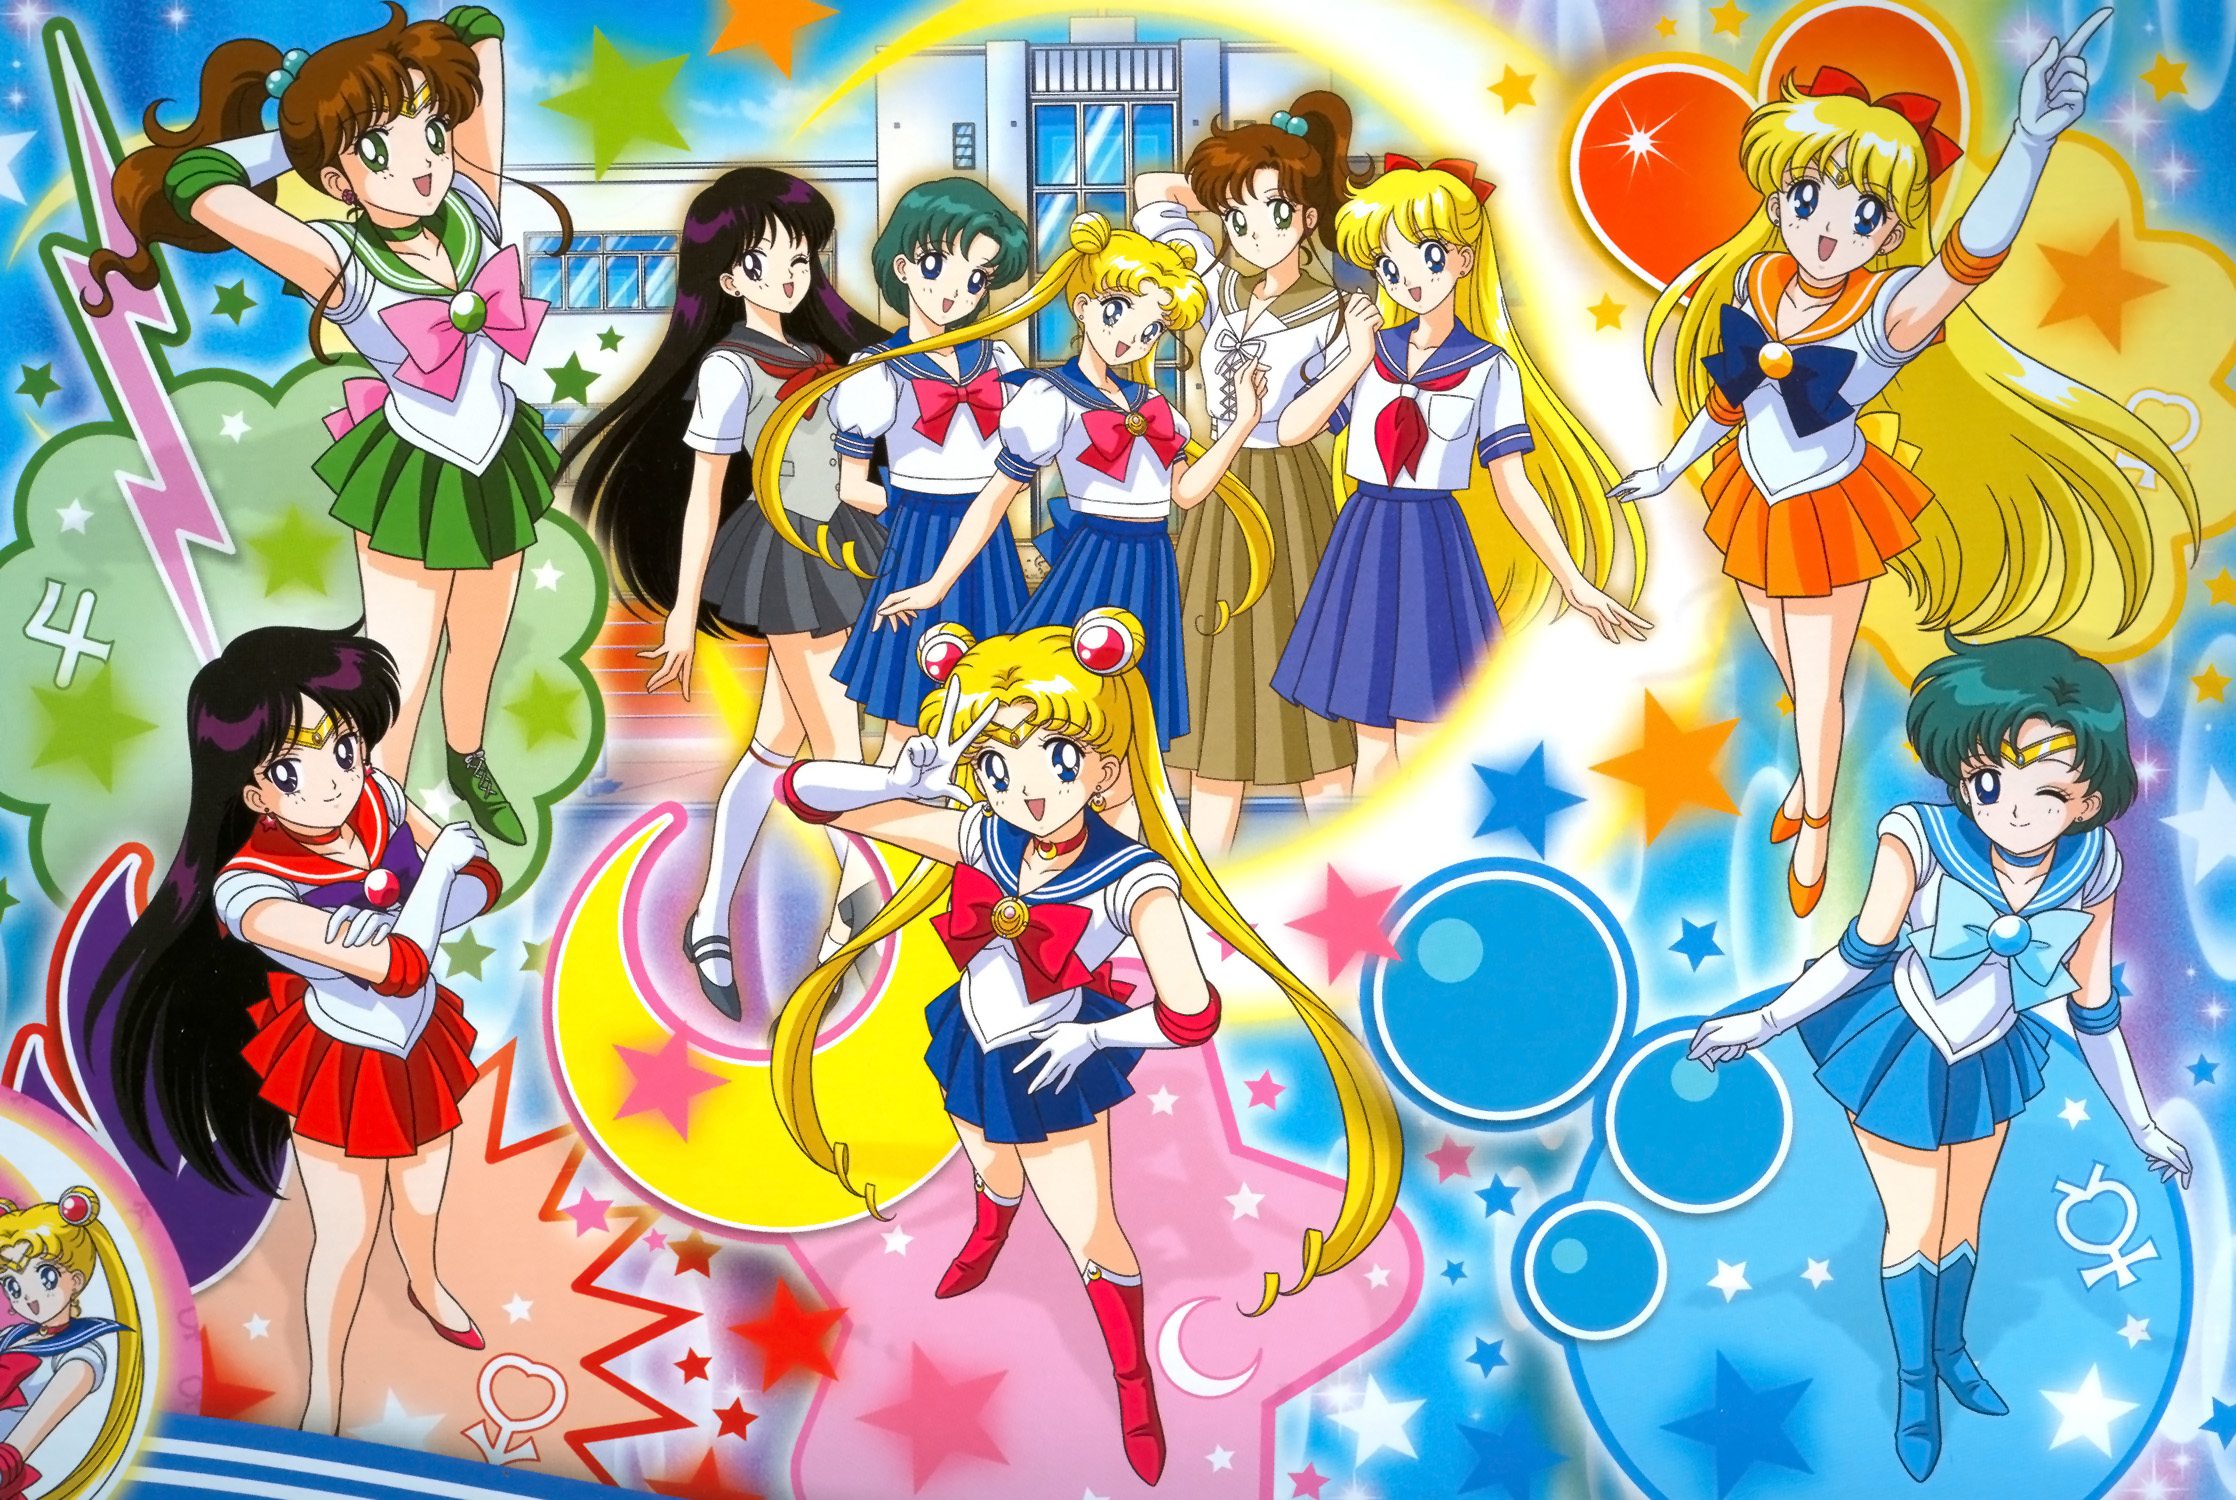 Sailor Moon #17